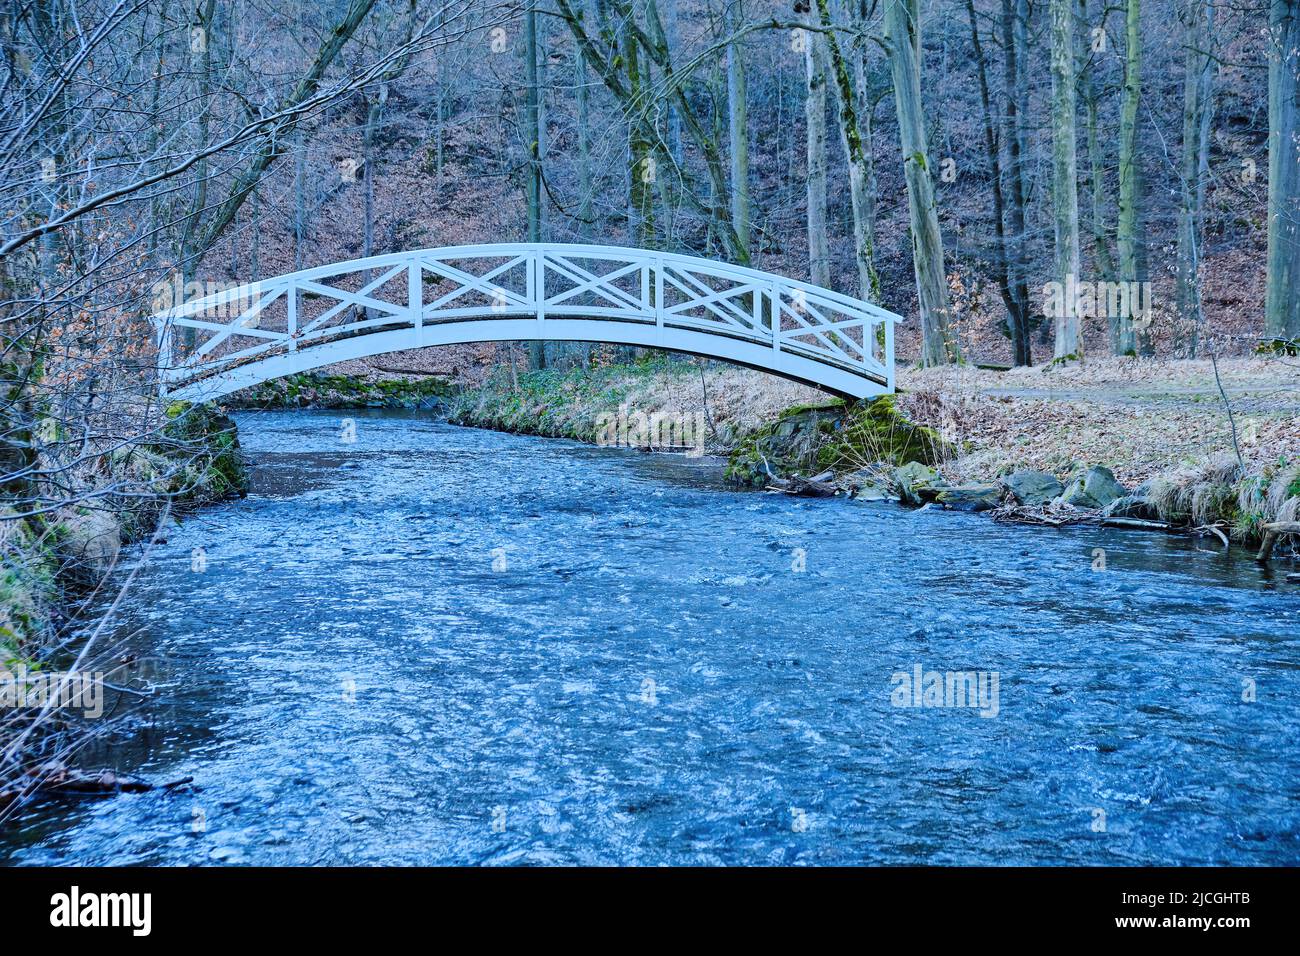 Seifersdorfer Tal, Wachau, Saxony, Germany: Wooden bridge across the Grosse Roeder in the park of the Seifersdorfer Tal. Stock Photo